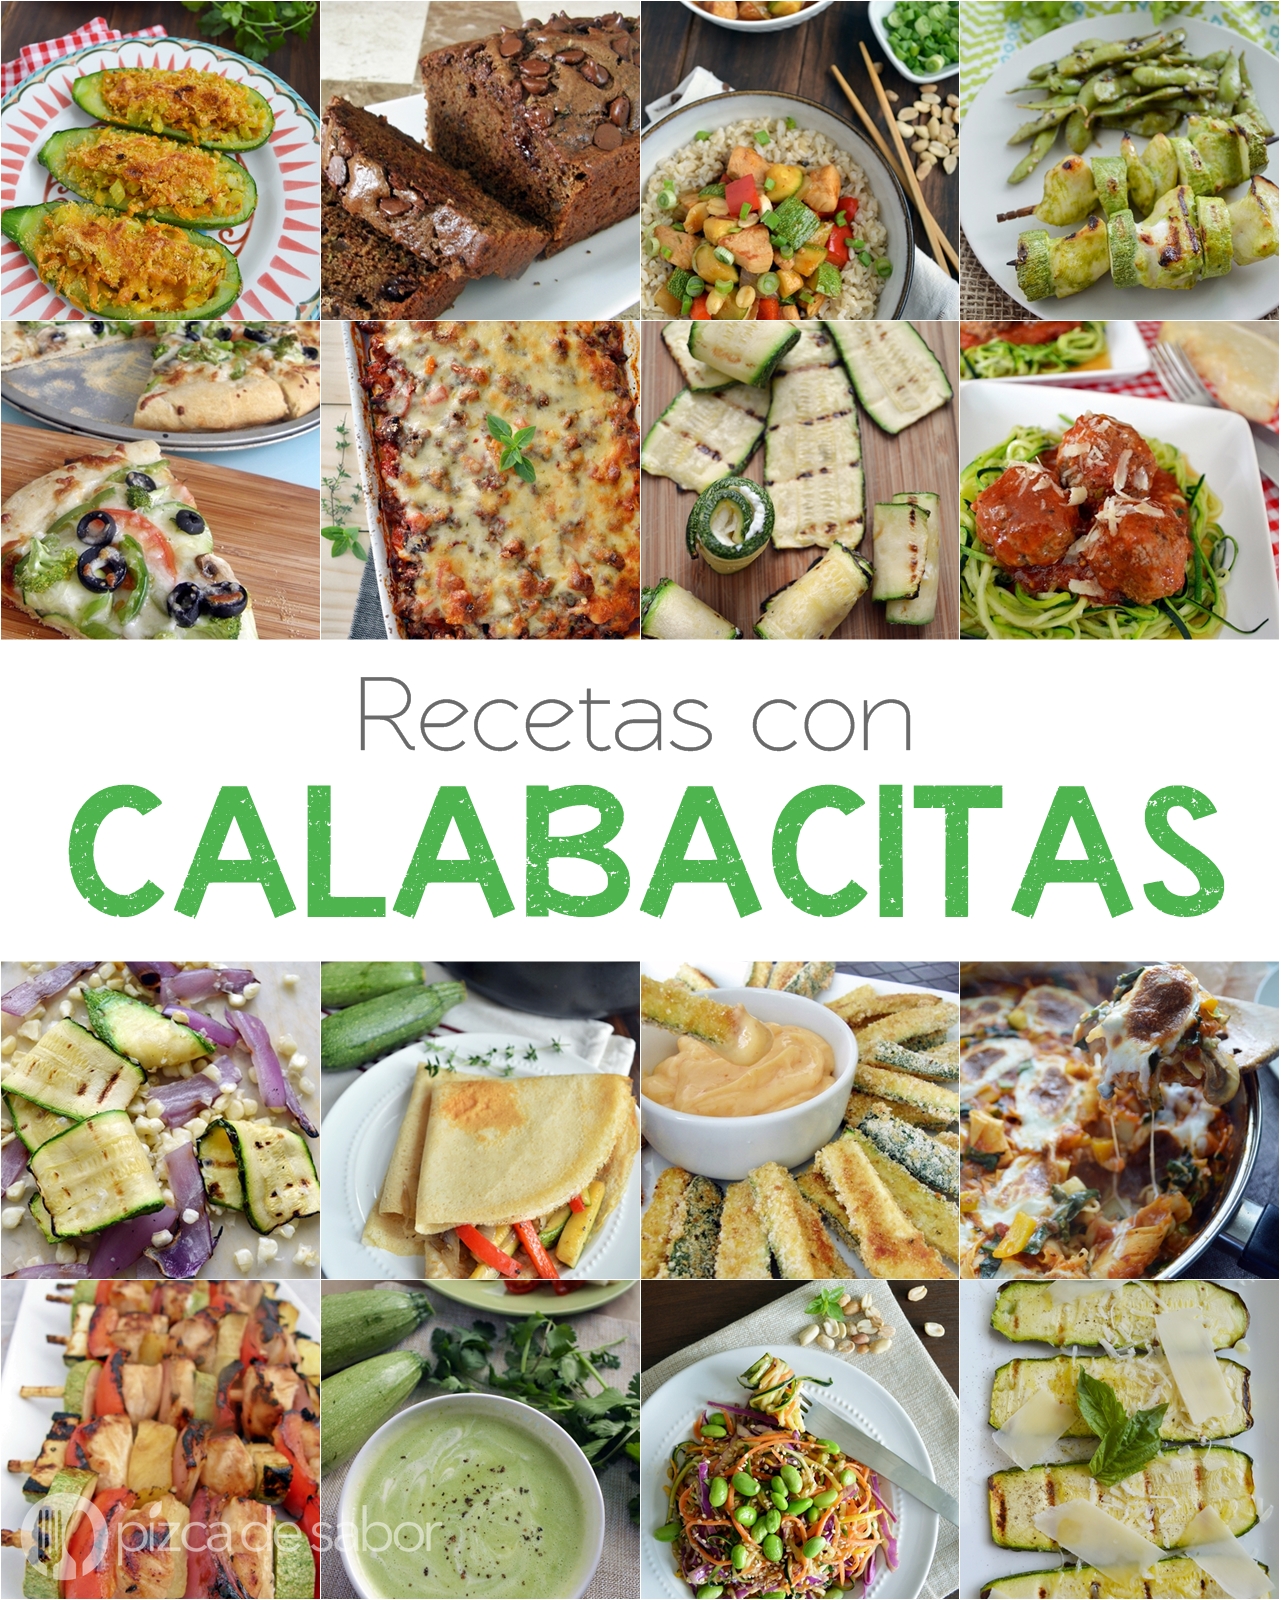 Recetas con calabacitas, zucchini, zapallo italiano o calabacín www.pizcadesabor.com